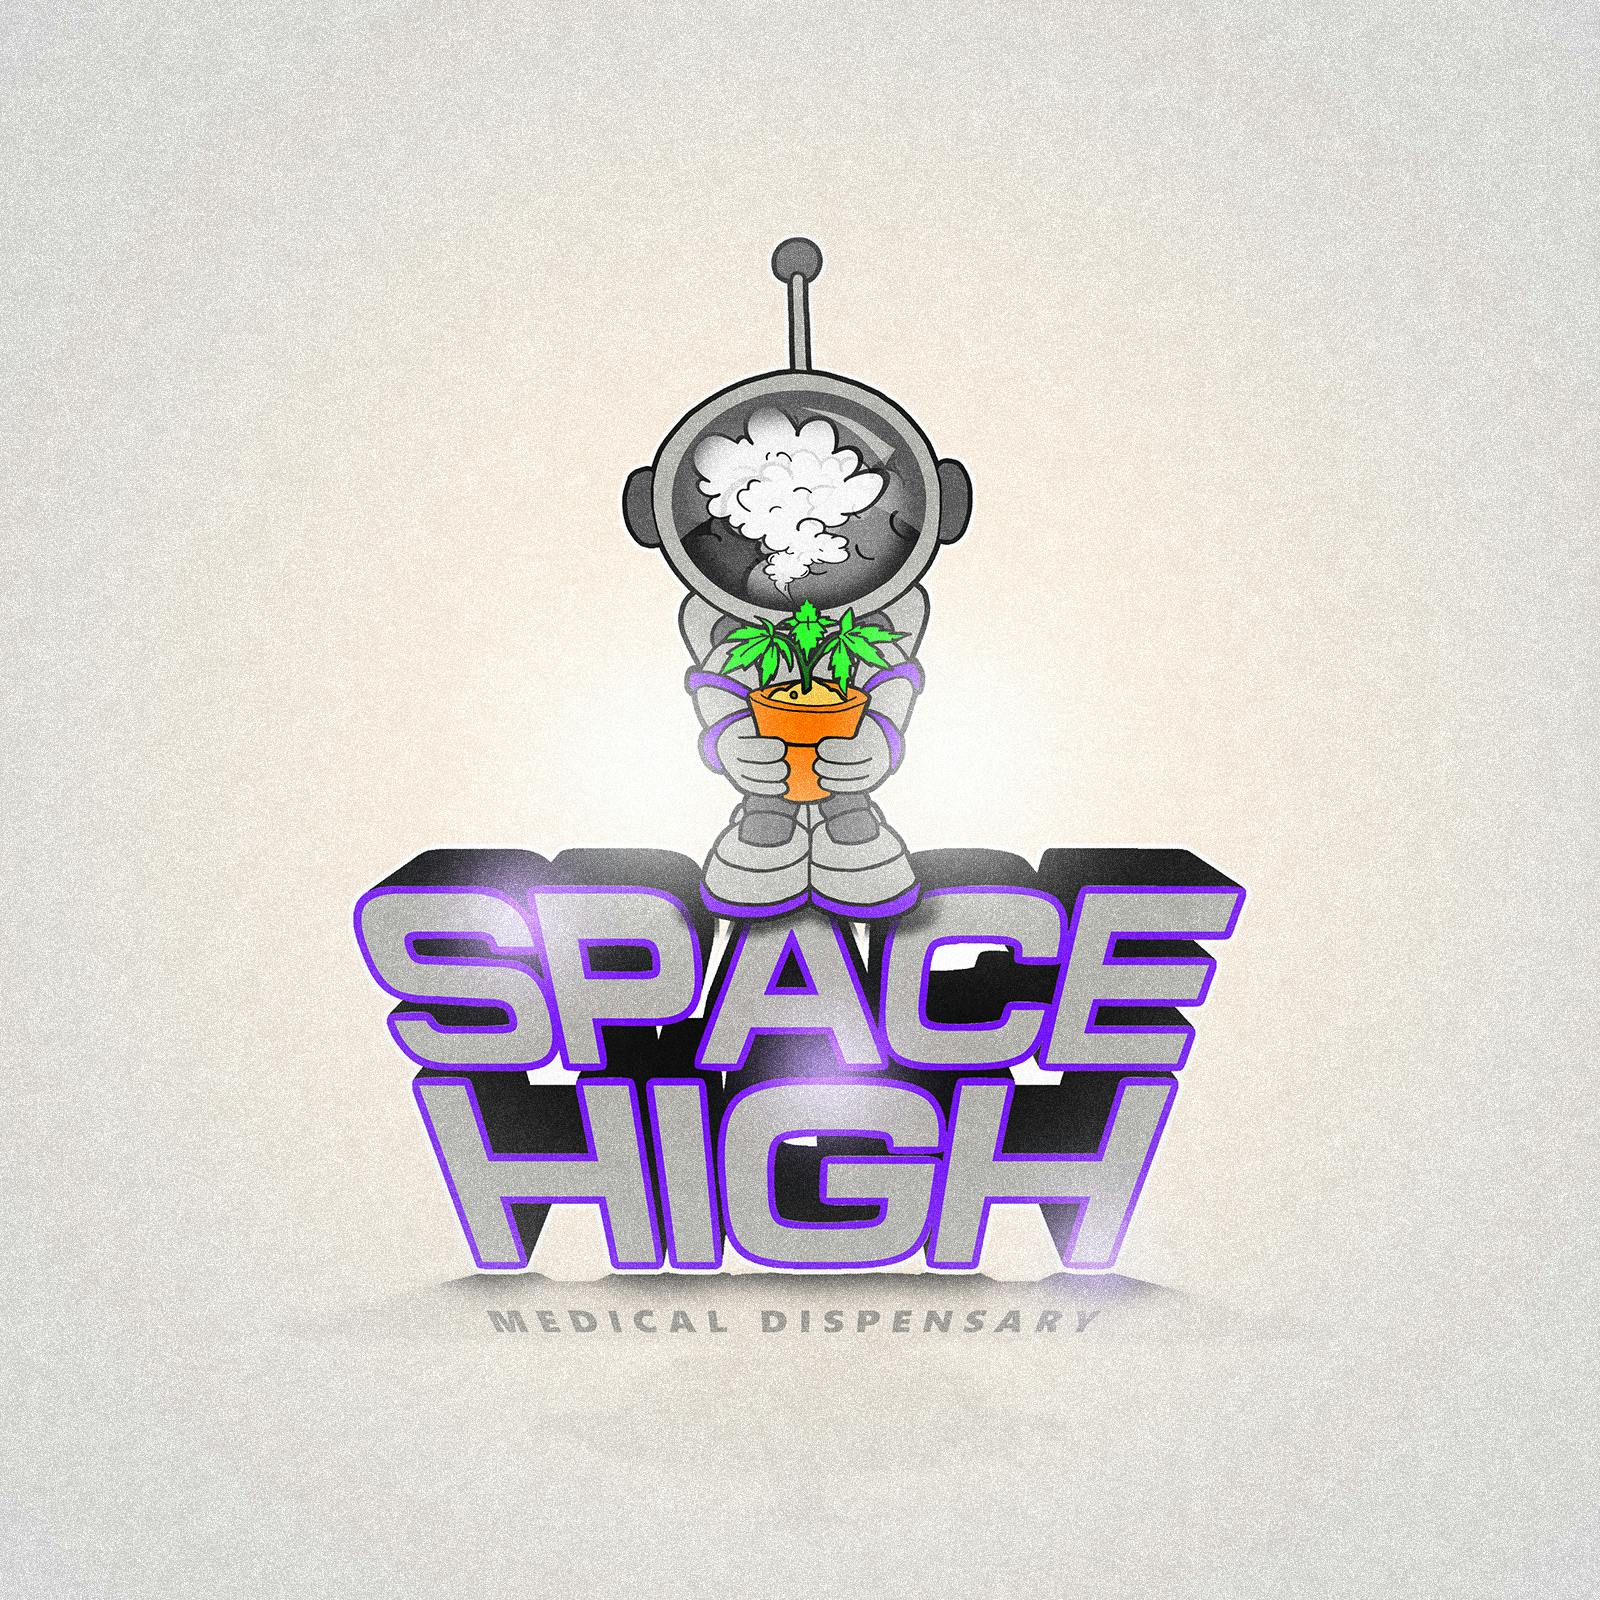 Space High Medical Dispensary logo